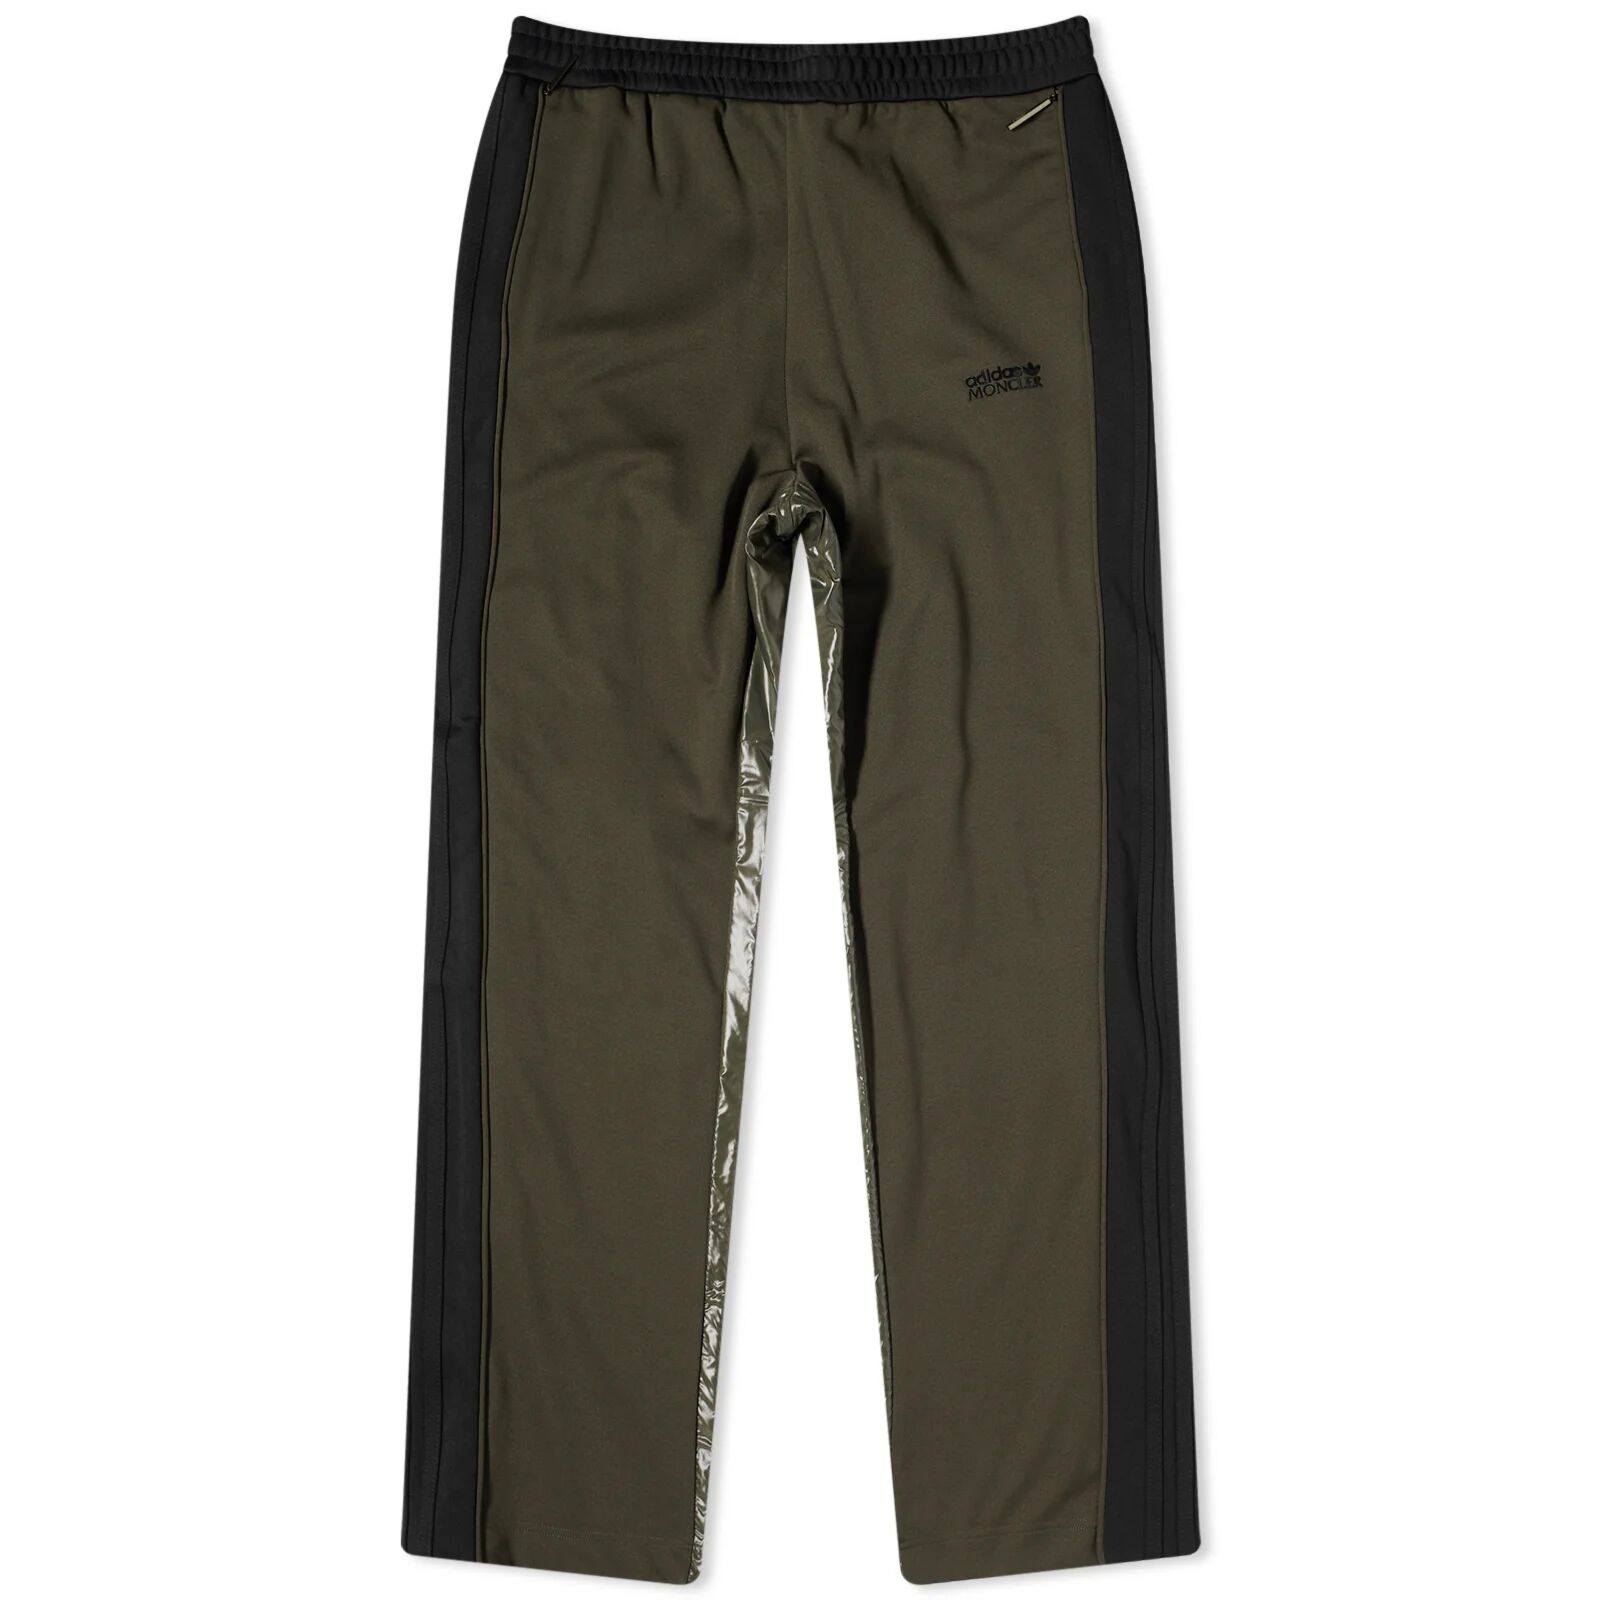 Moncler Men's x adidas Originals Mix Track Pants in Olive, Size Medium